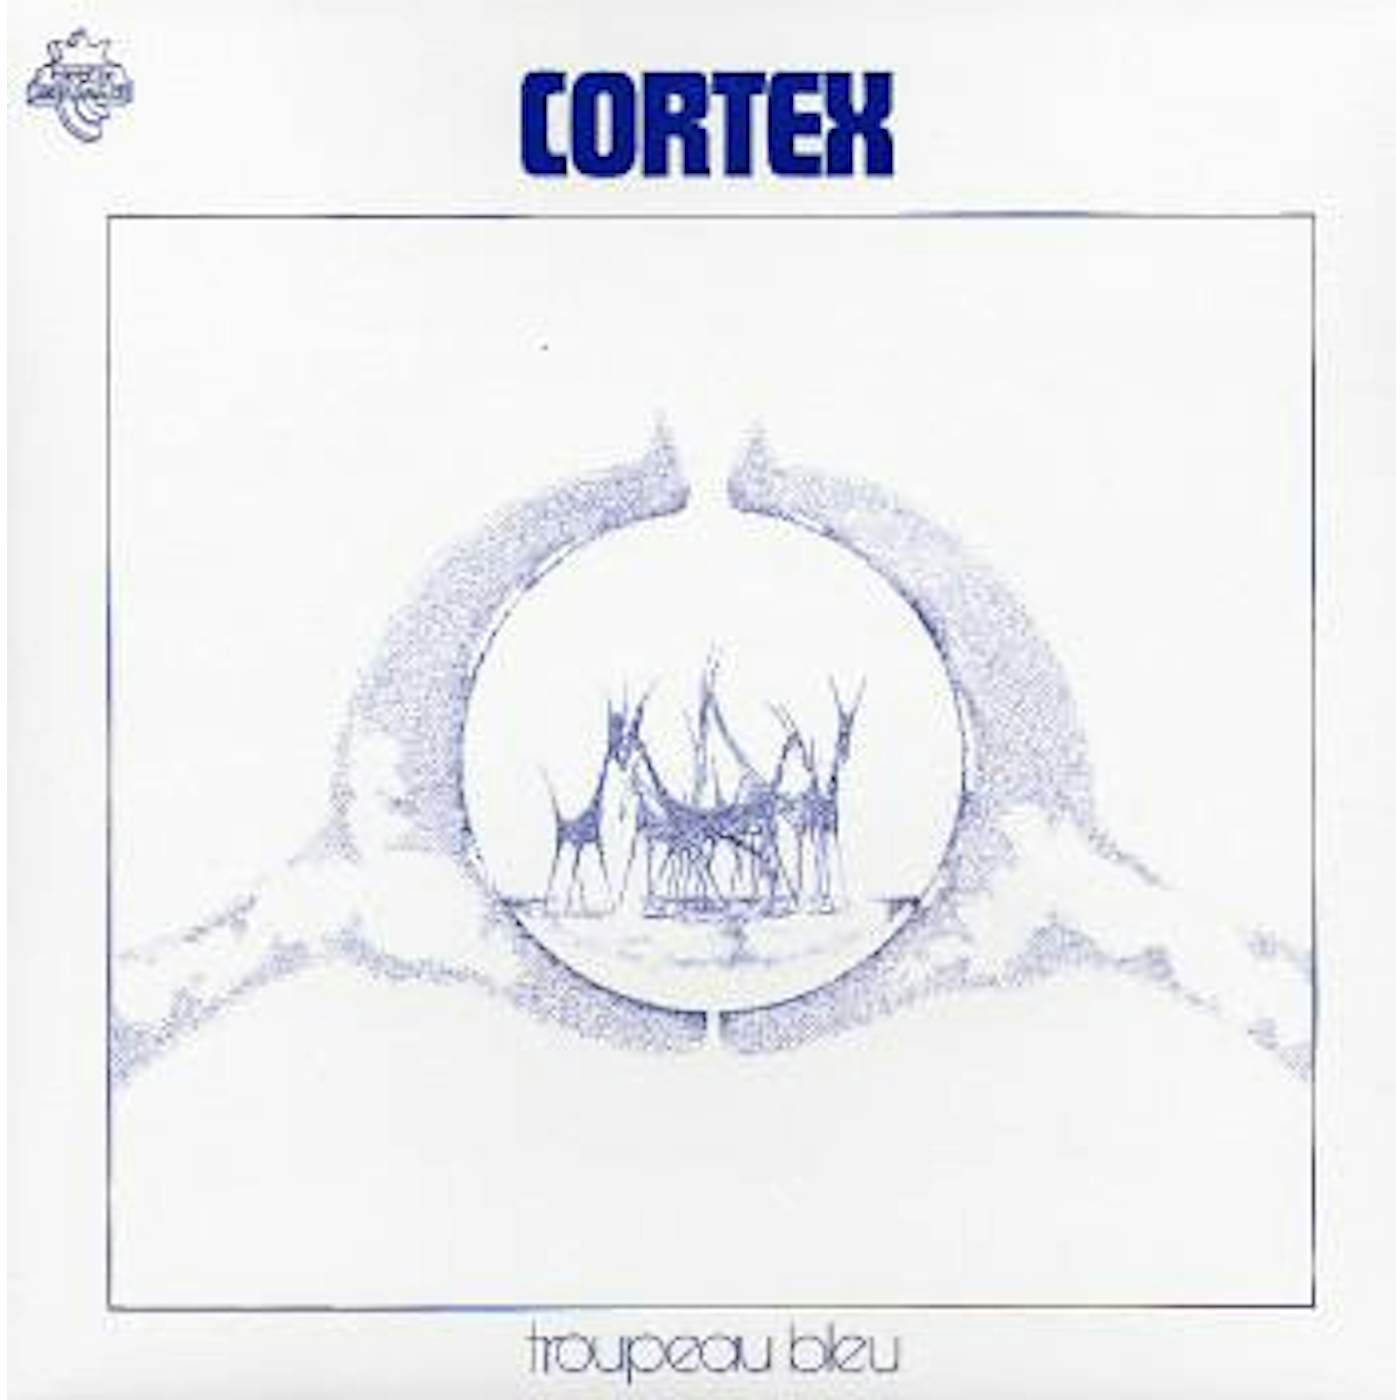 Cortex Troupeau Bleu Vinyl Record